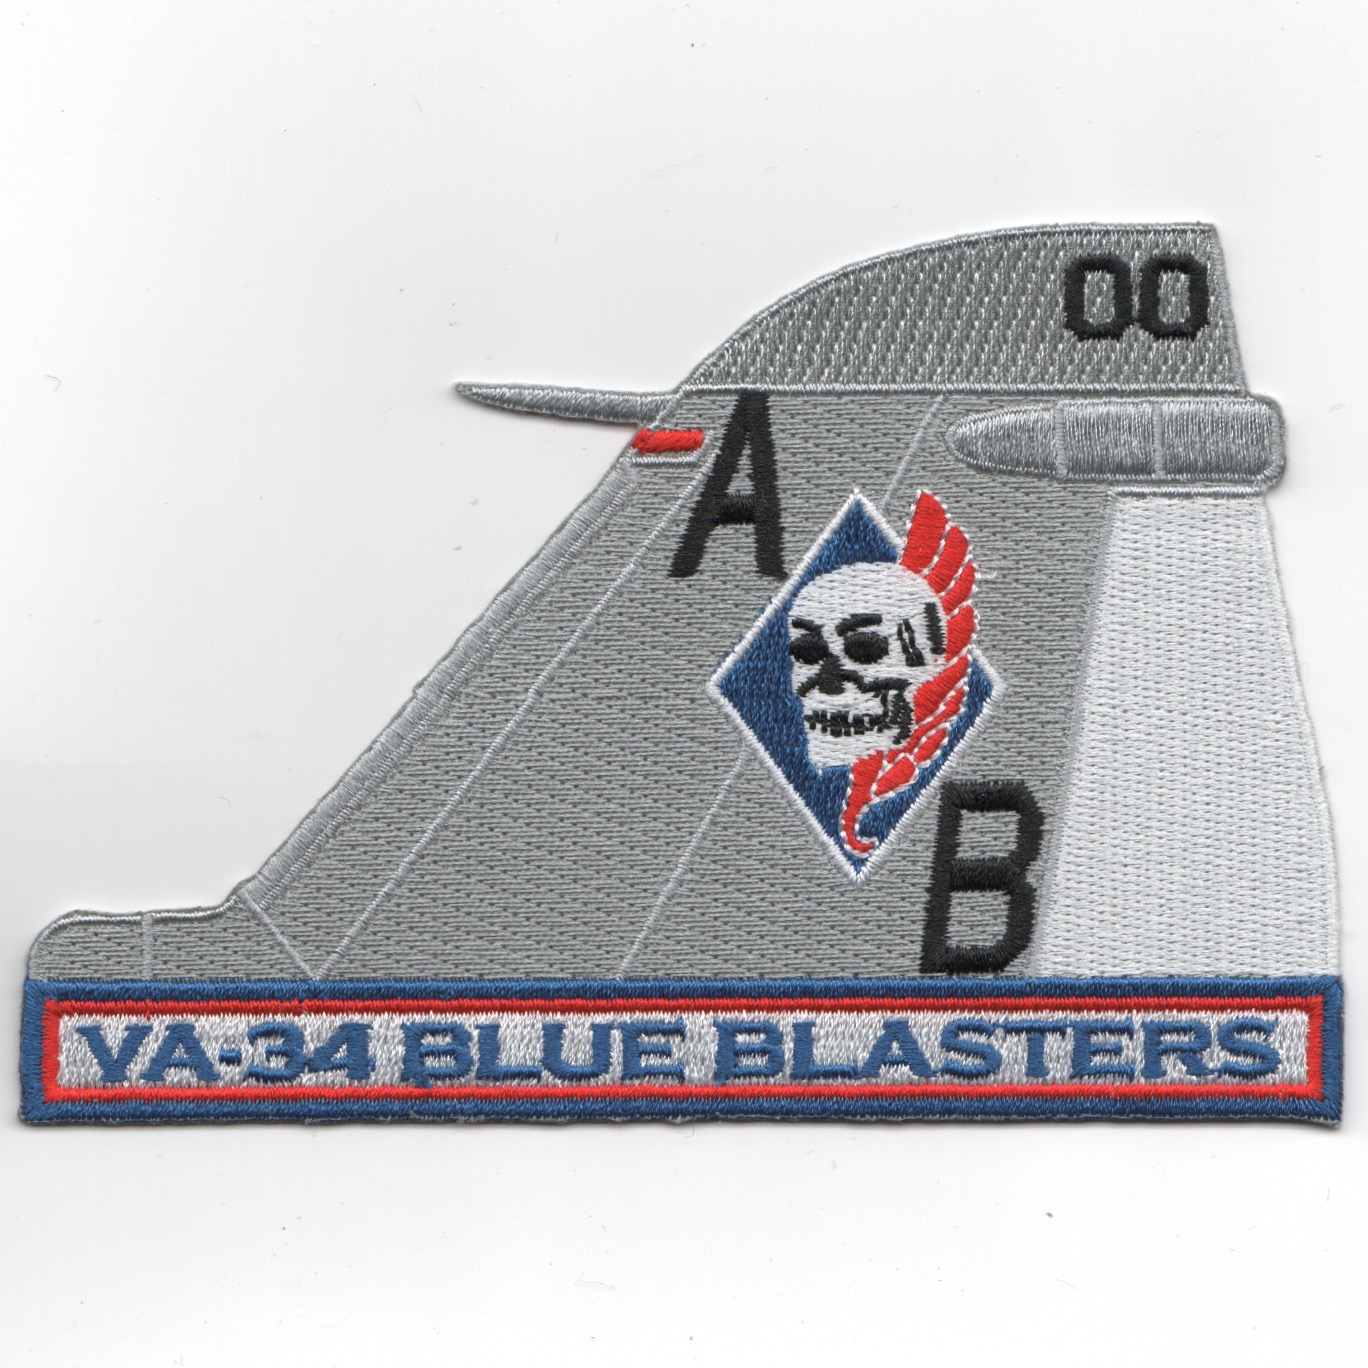 VA-34 A-6E Tailfin Patch